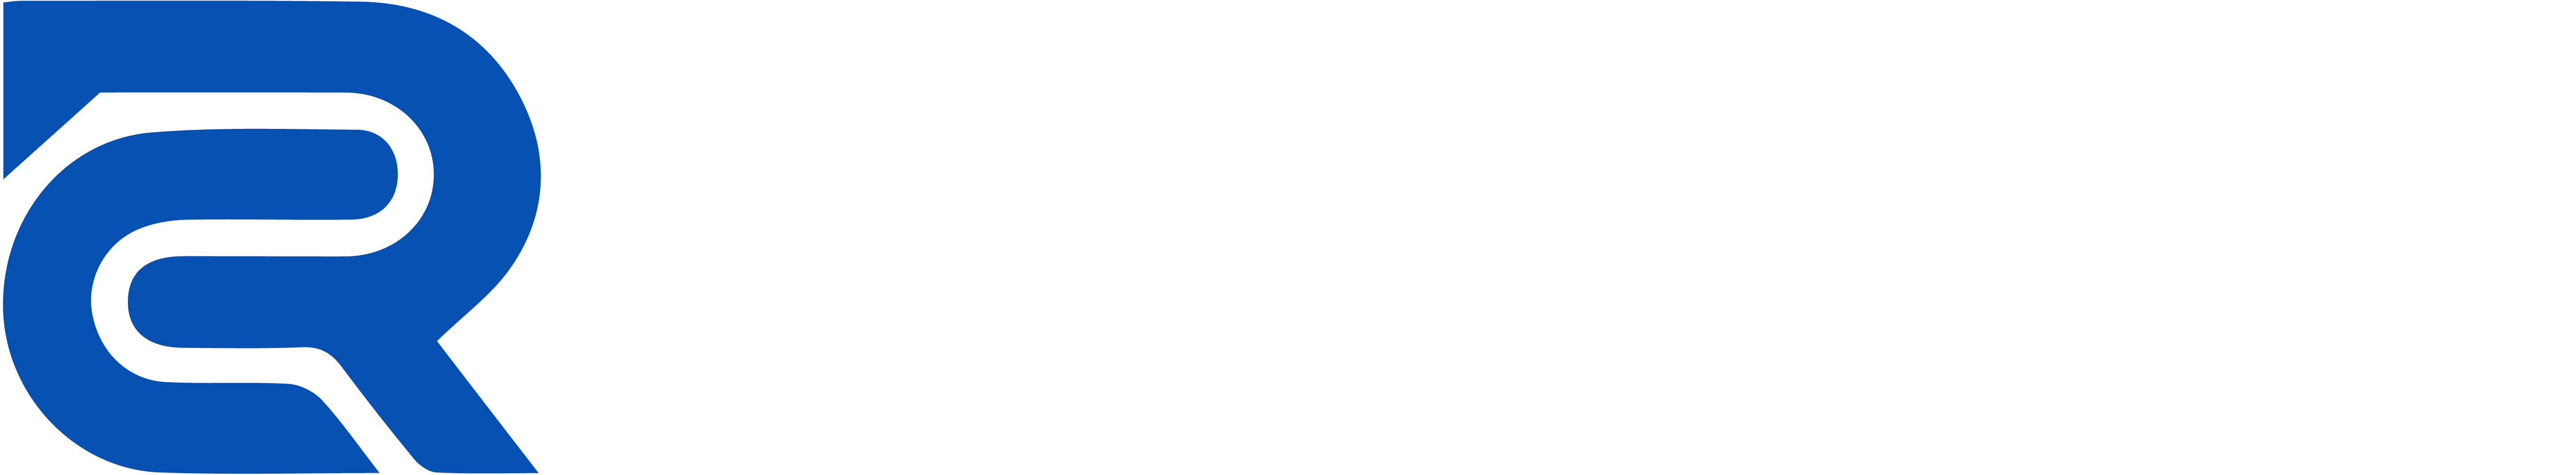 ROKADAA.COM